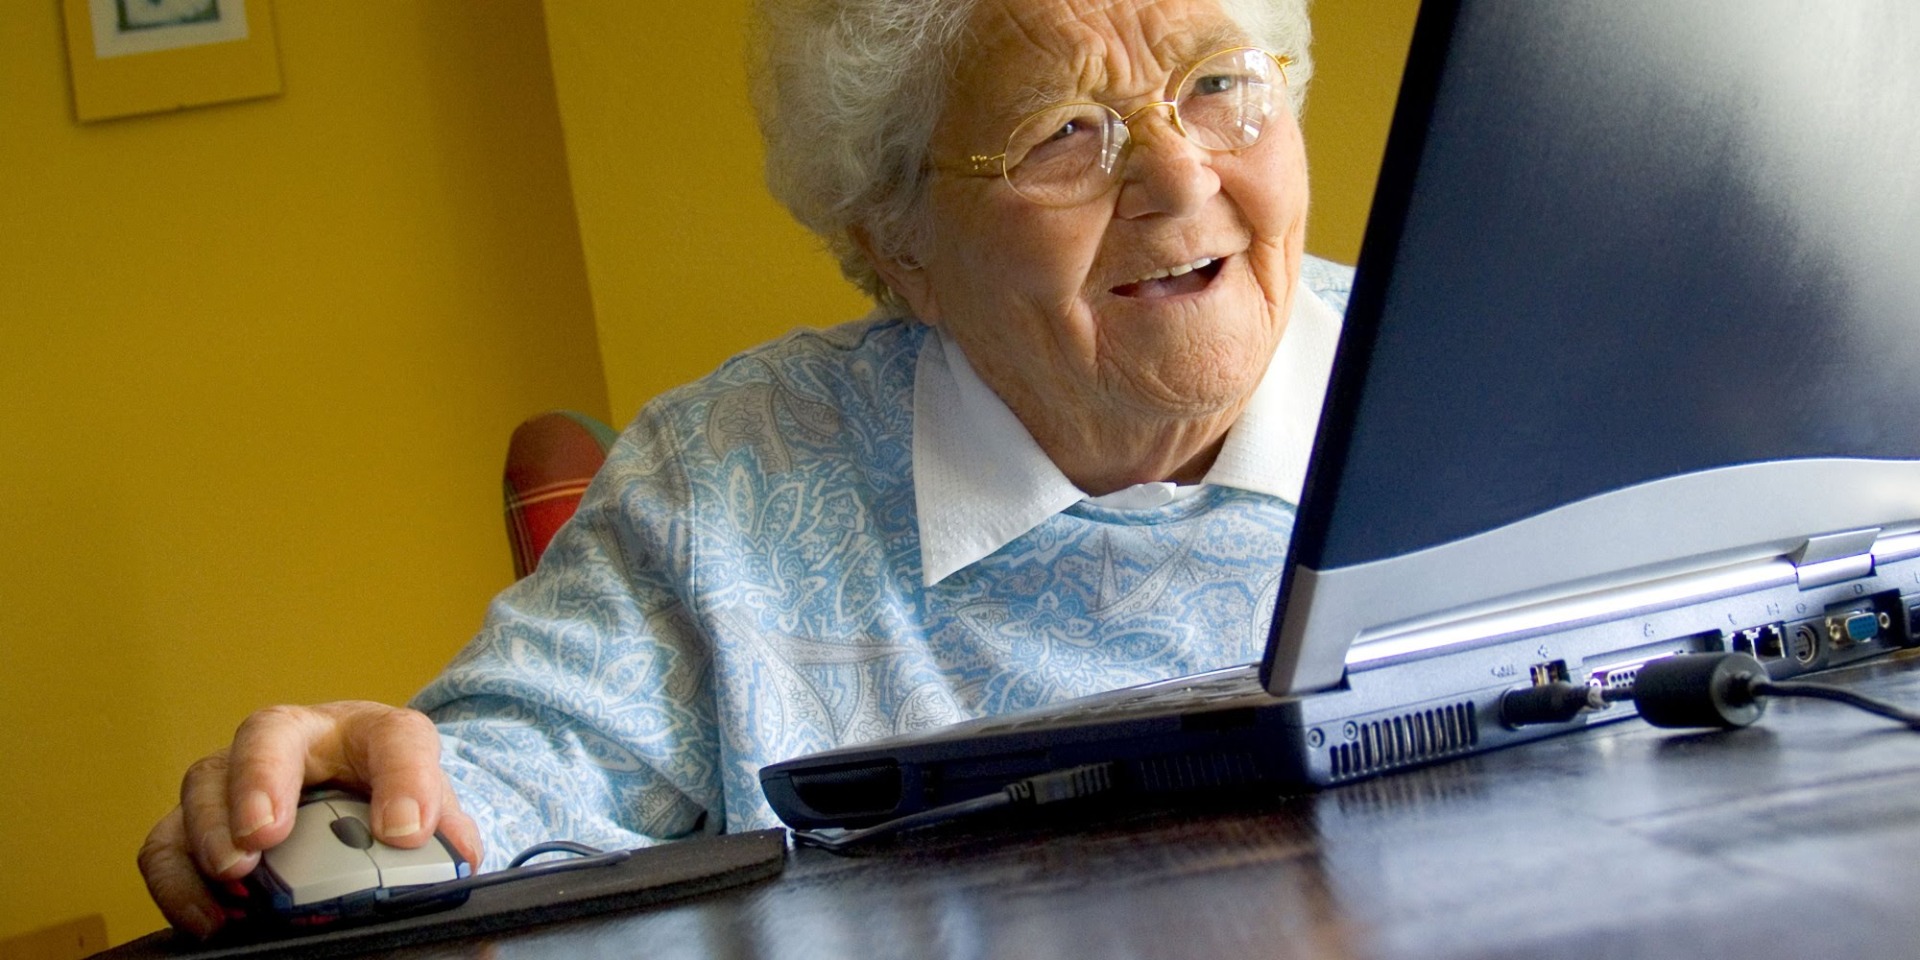 femeie batrana folosind un laptop